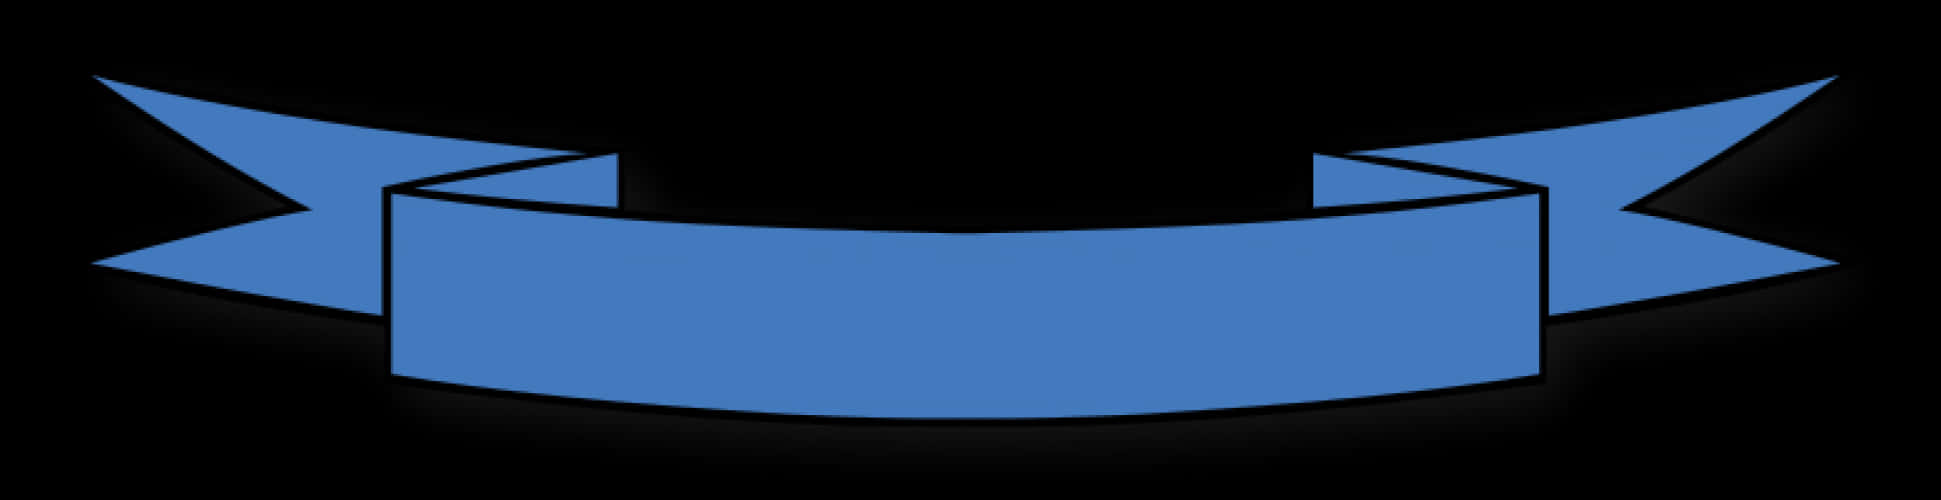 Blue Banner Ribbonon Black Background PNG